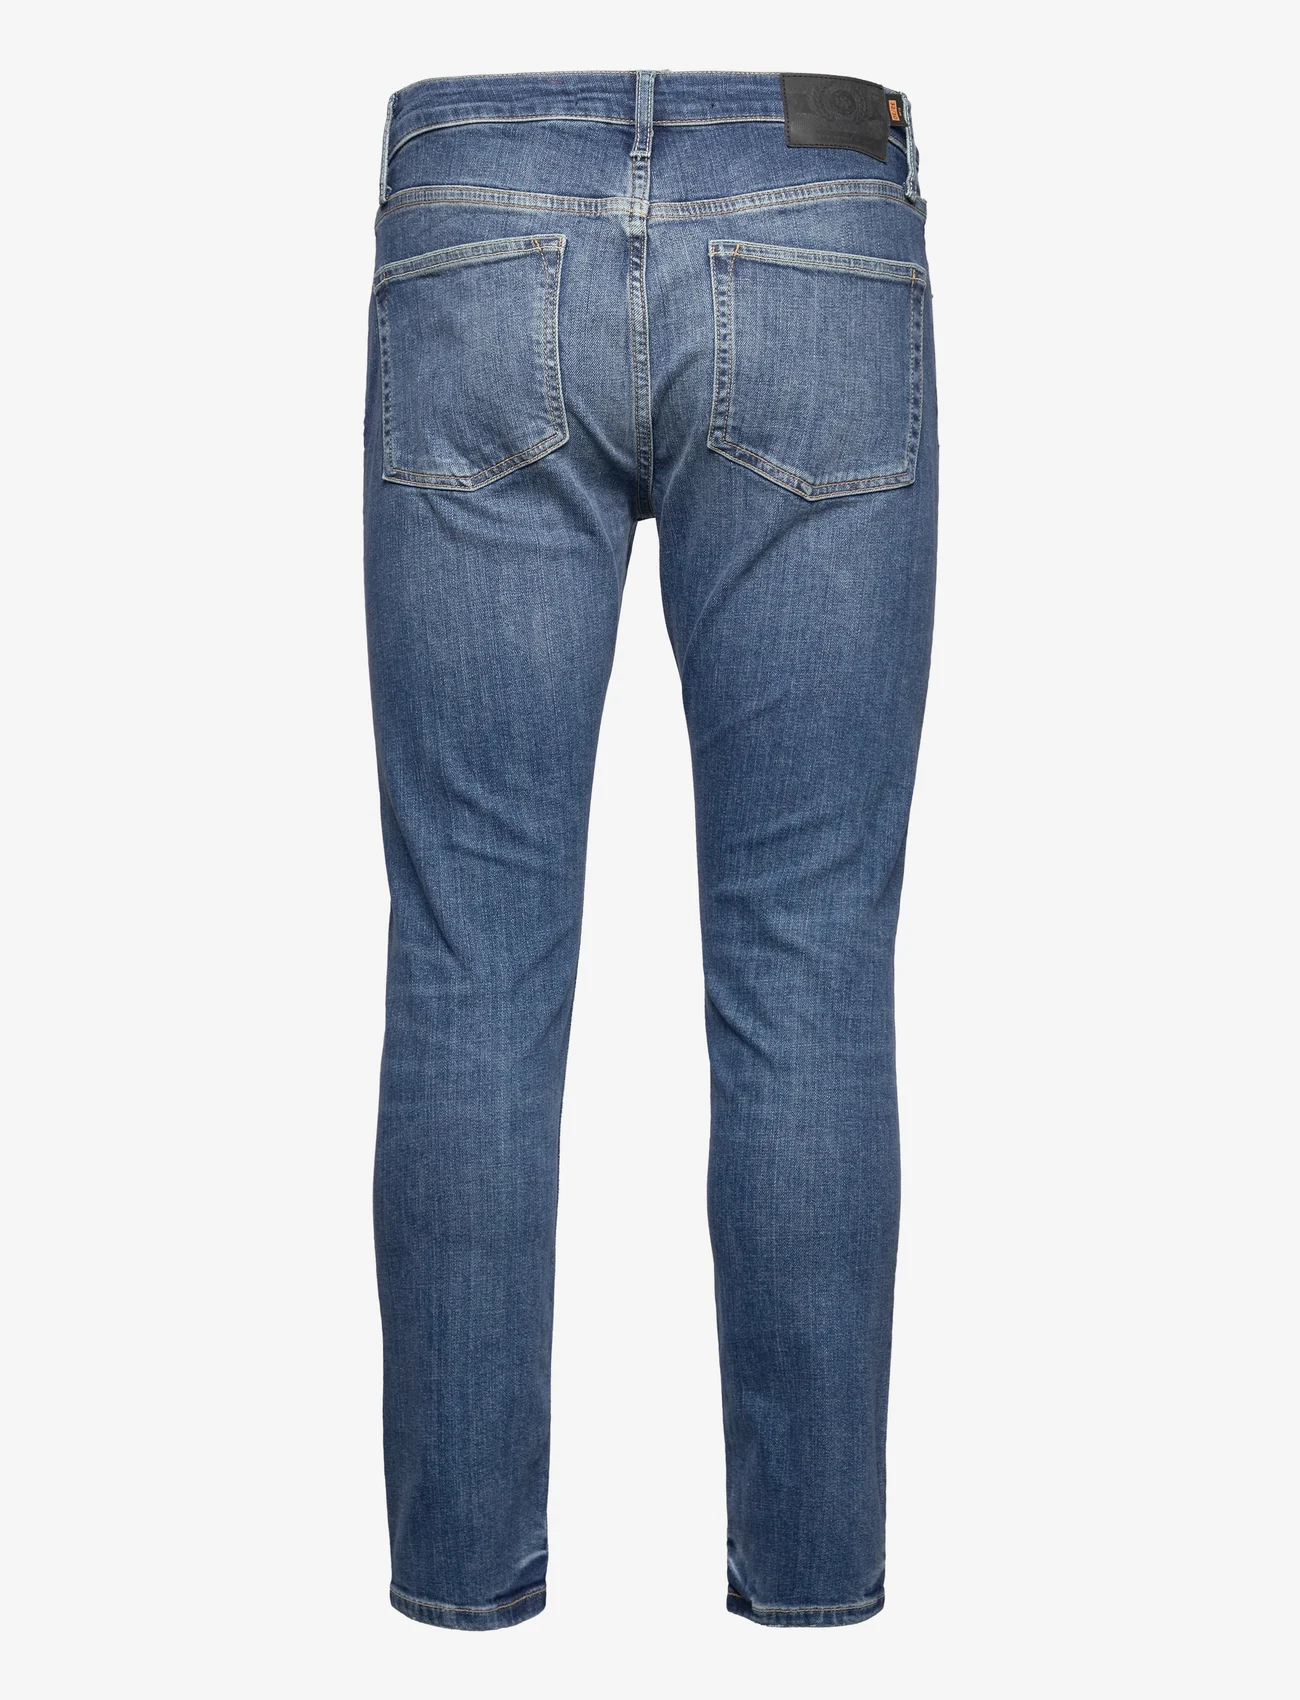 Superdry - VINTAGE SLIM JEANS - slim jeans - mercer mid blue - 1